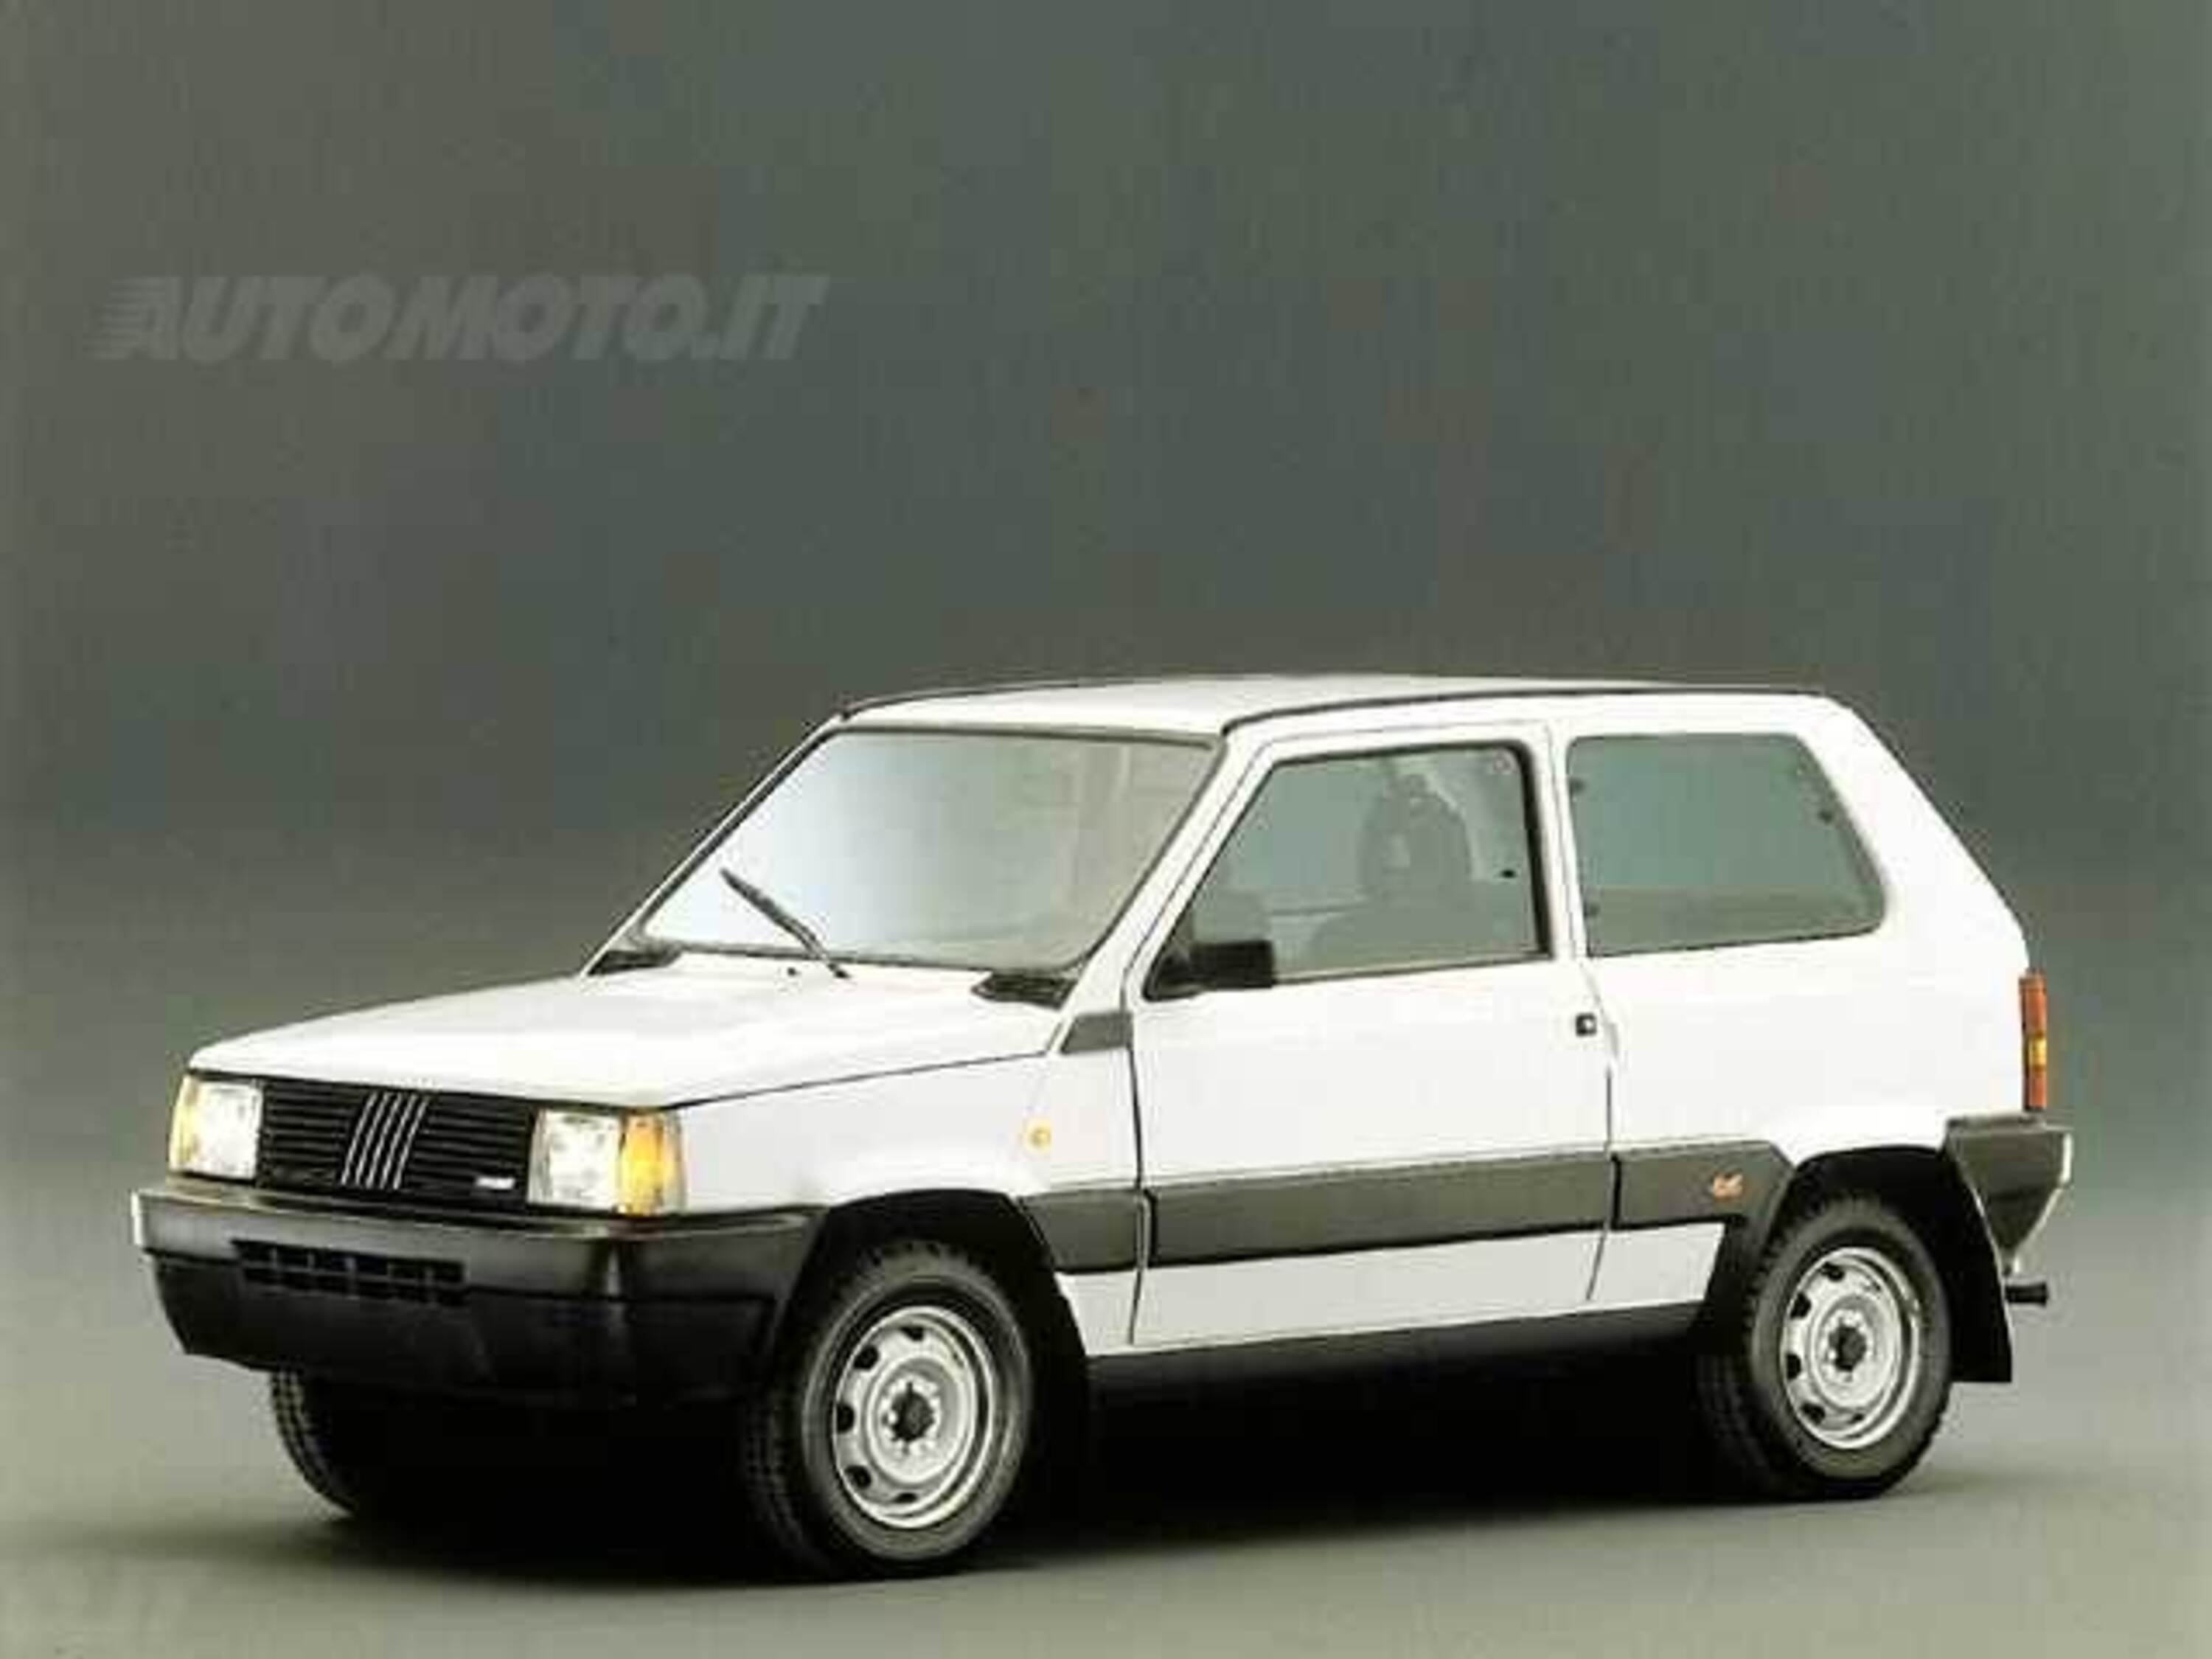 Fiat Panda 1100 i.e. cat 4x4 my 97